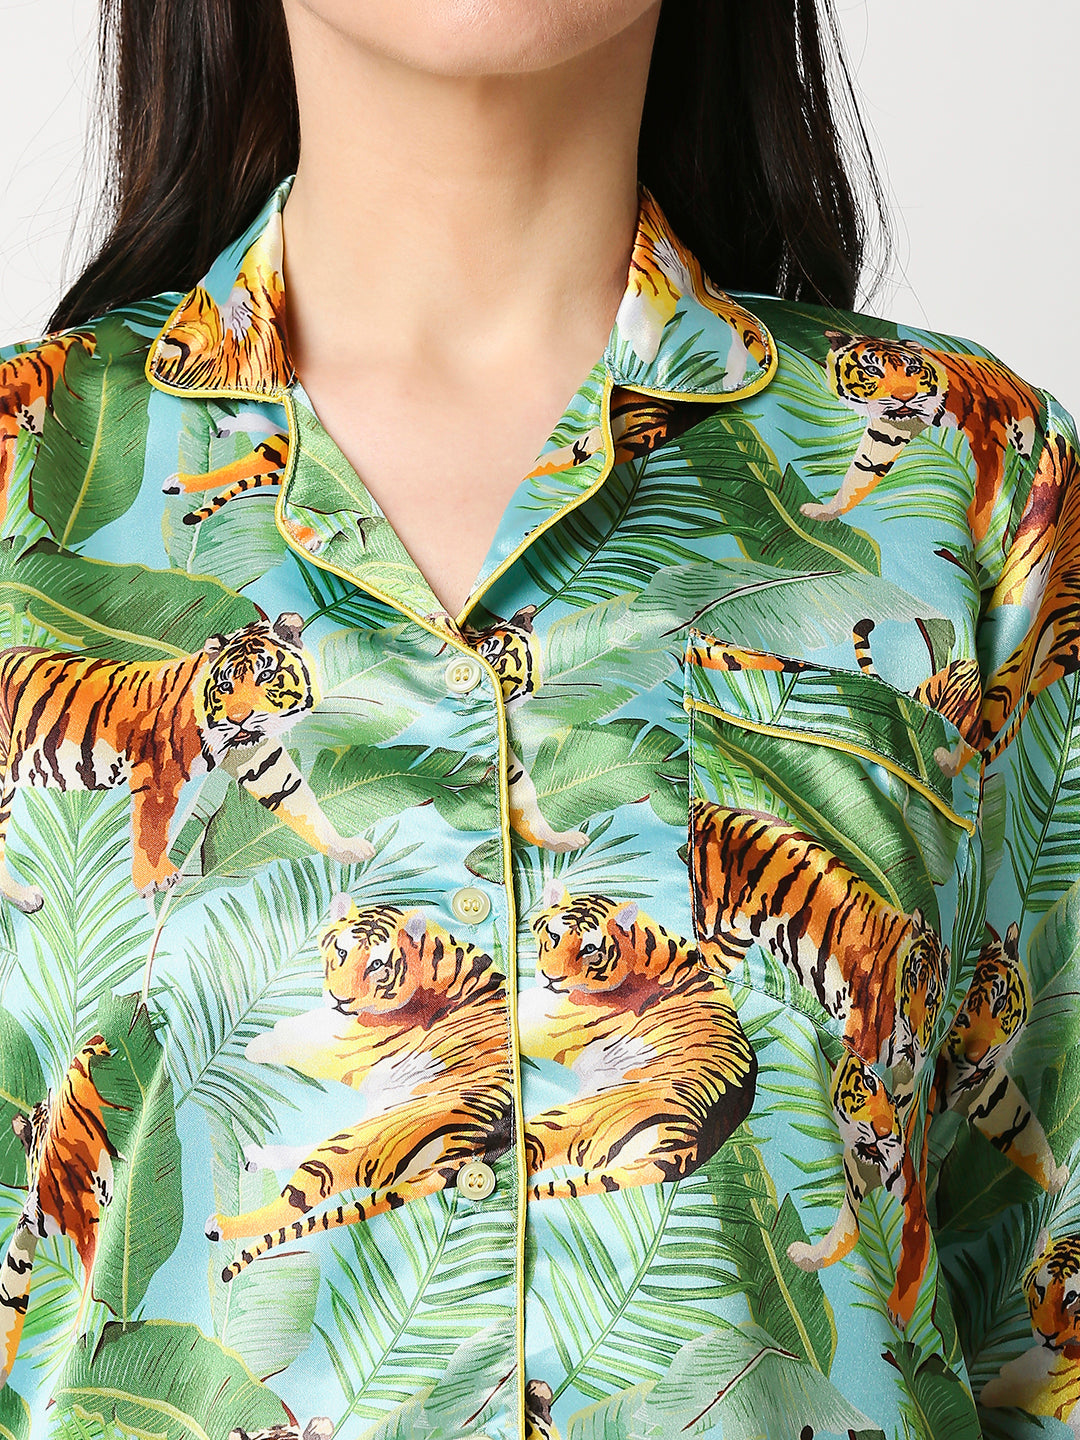 Tiger Safari Sleepshirt - Luxury Printed Satin Sleepshirt